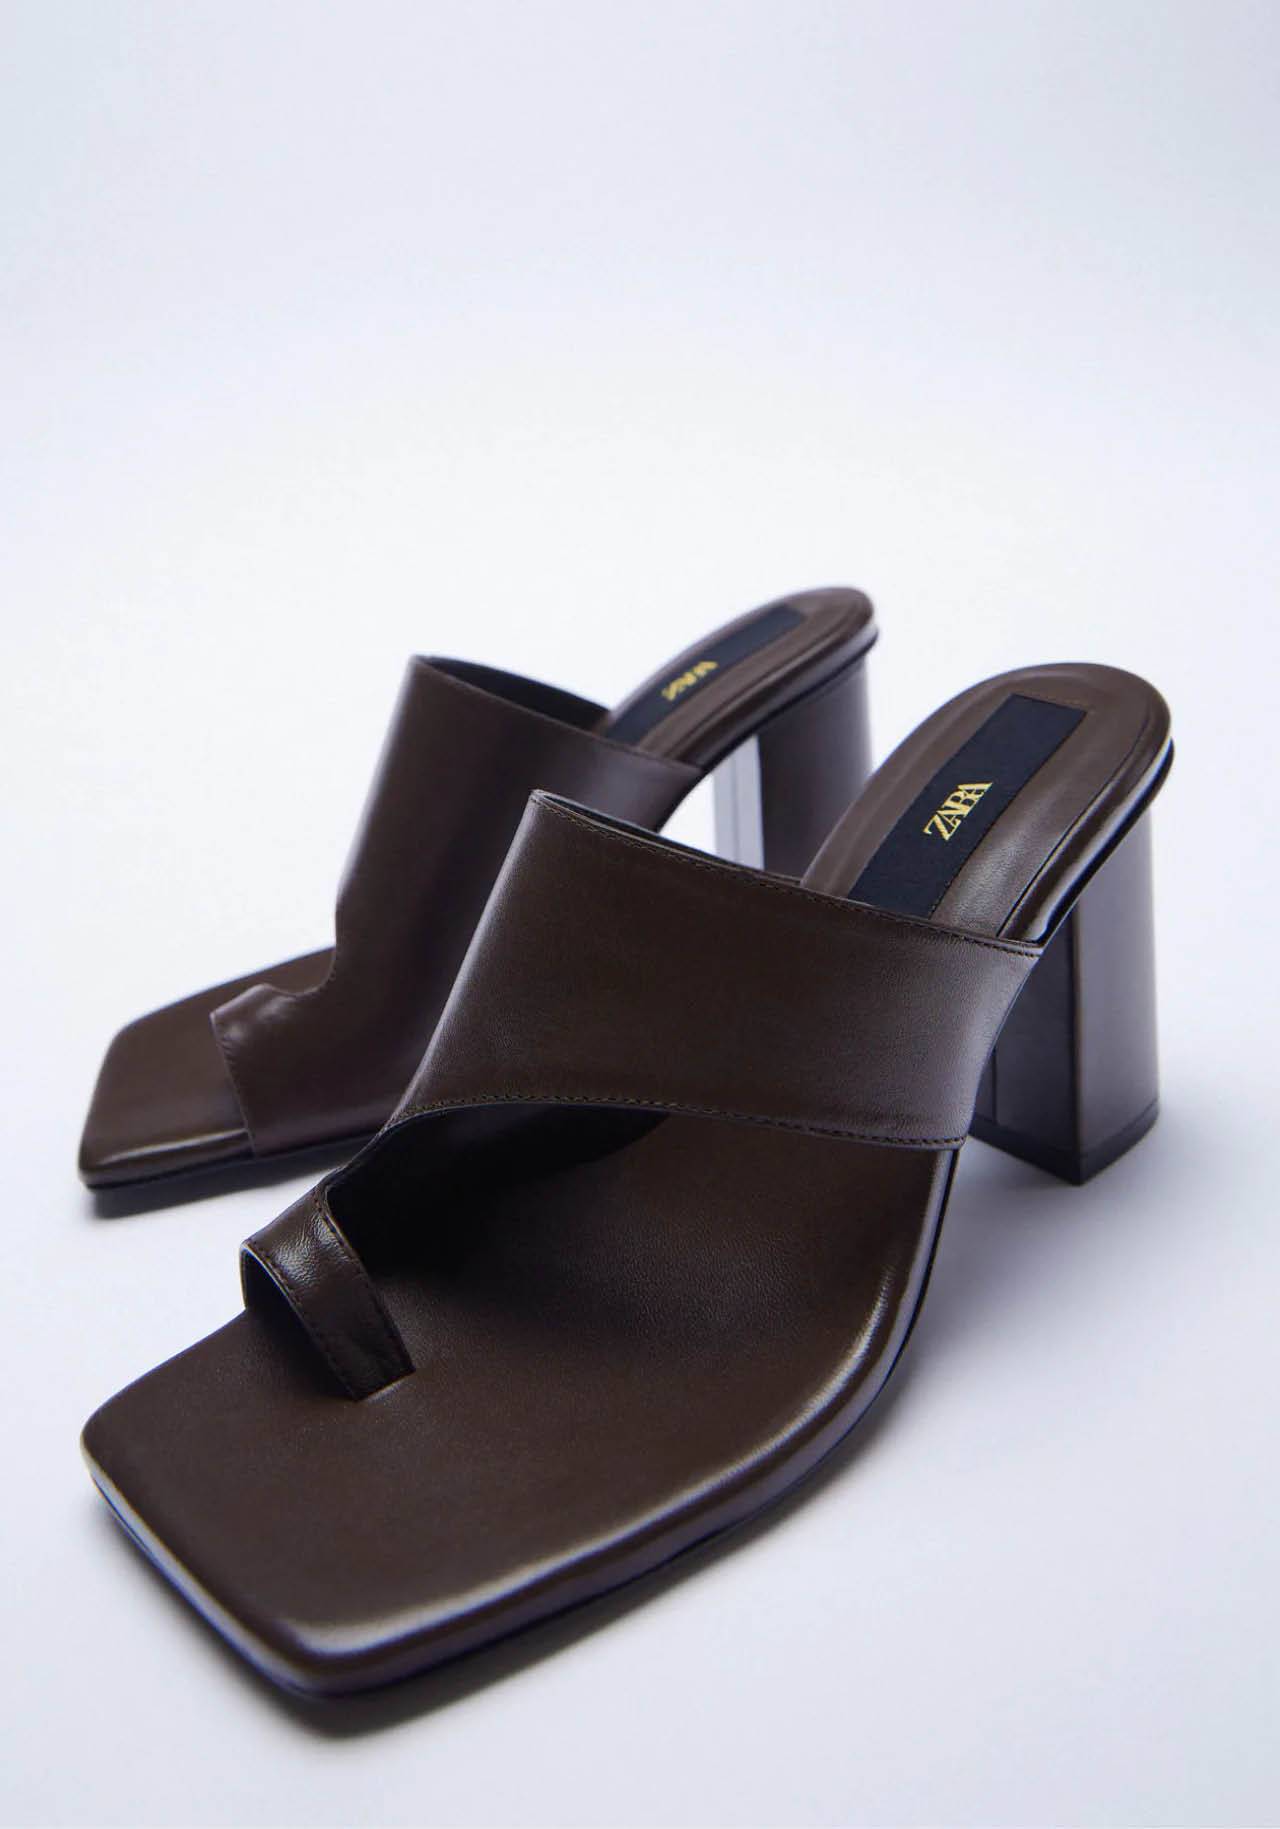 Sandalias asimétricas de Zara